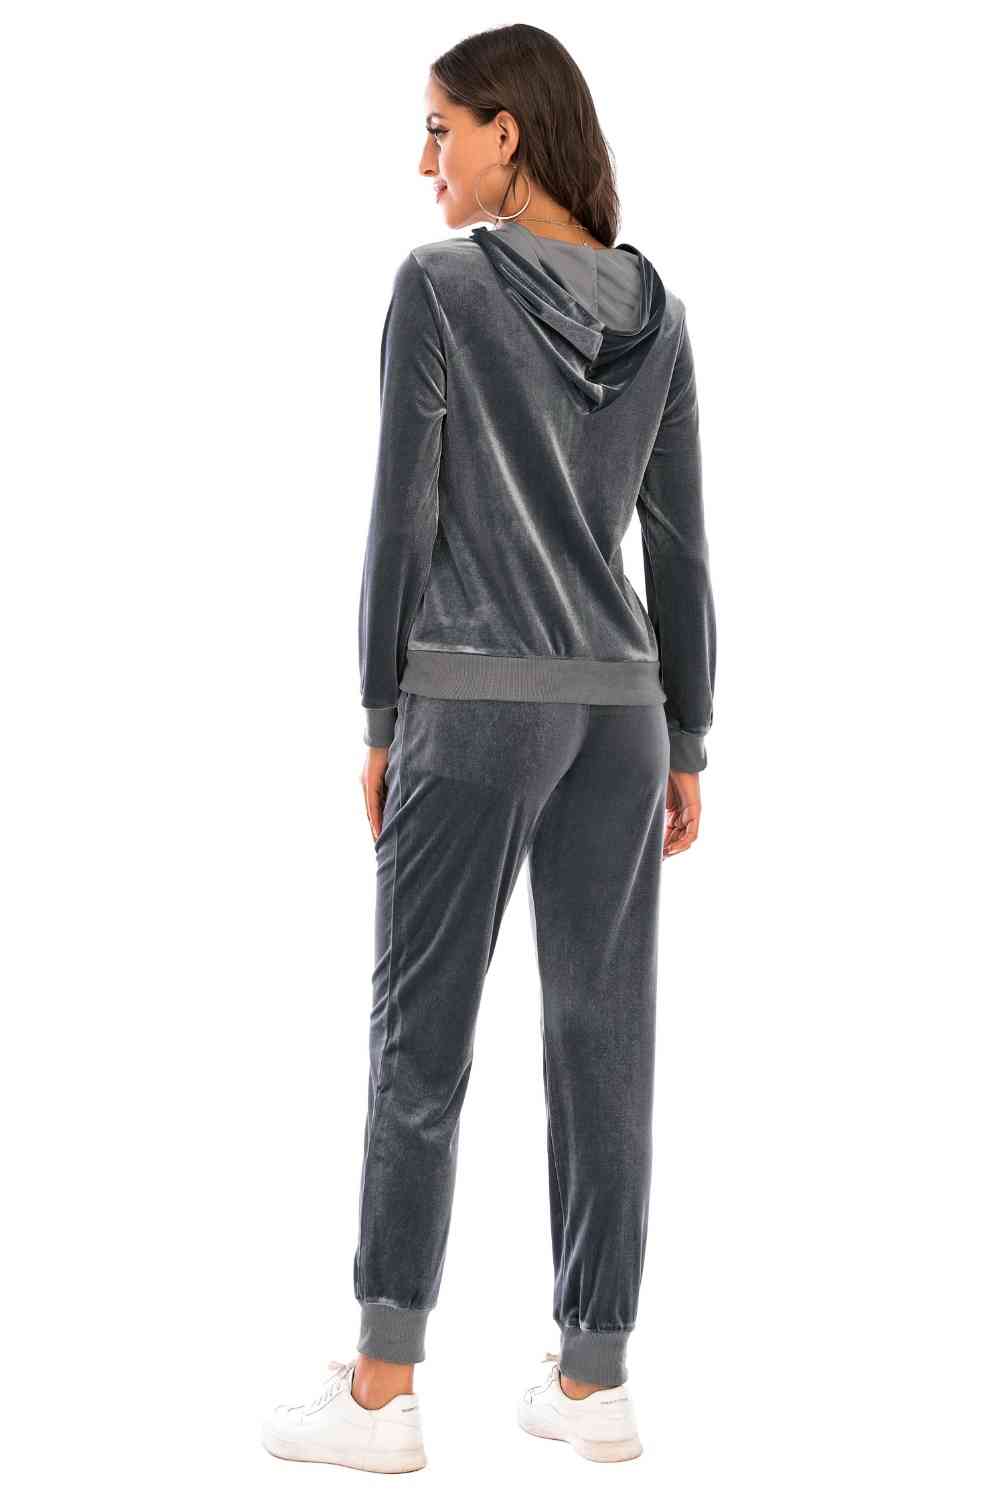 Dark Slate Gray Zip-Up Hooded Jacket and Pants Set New Year Looks